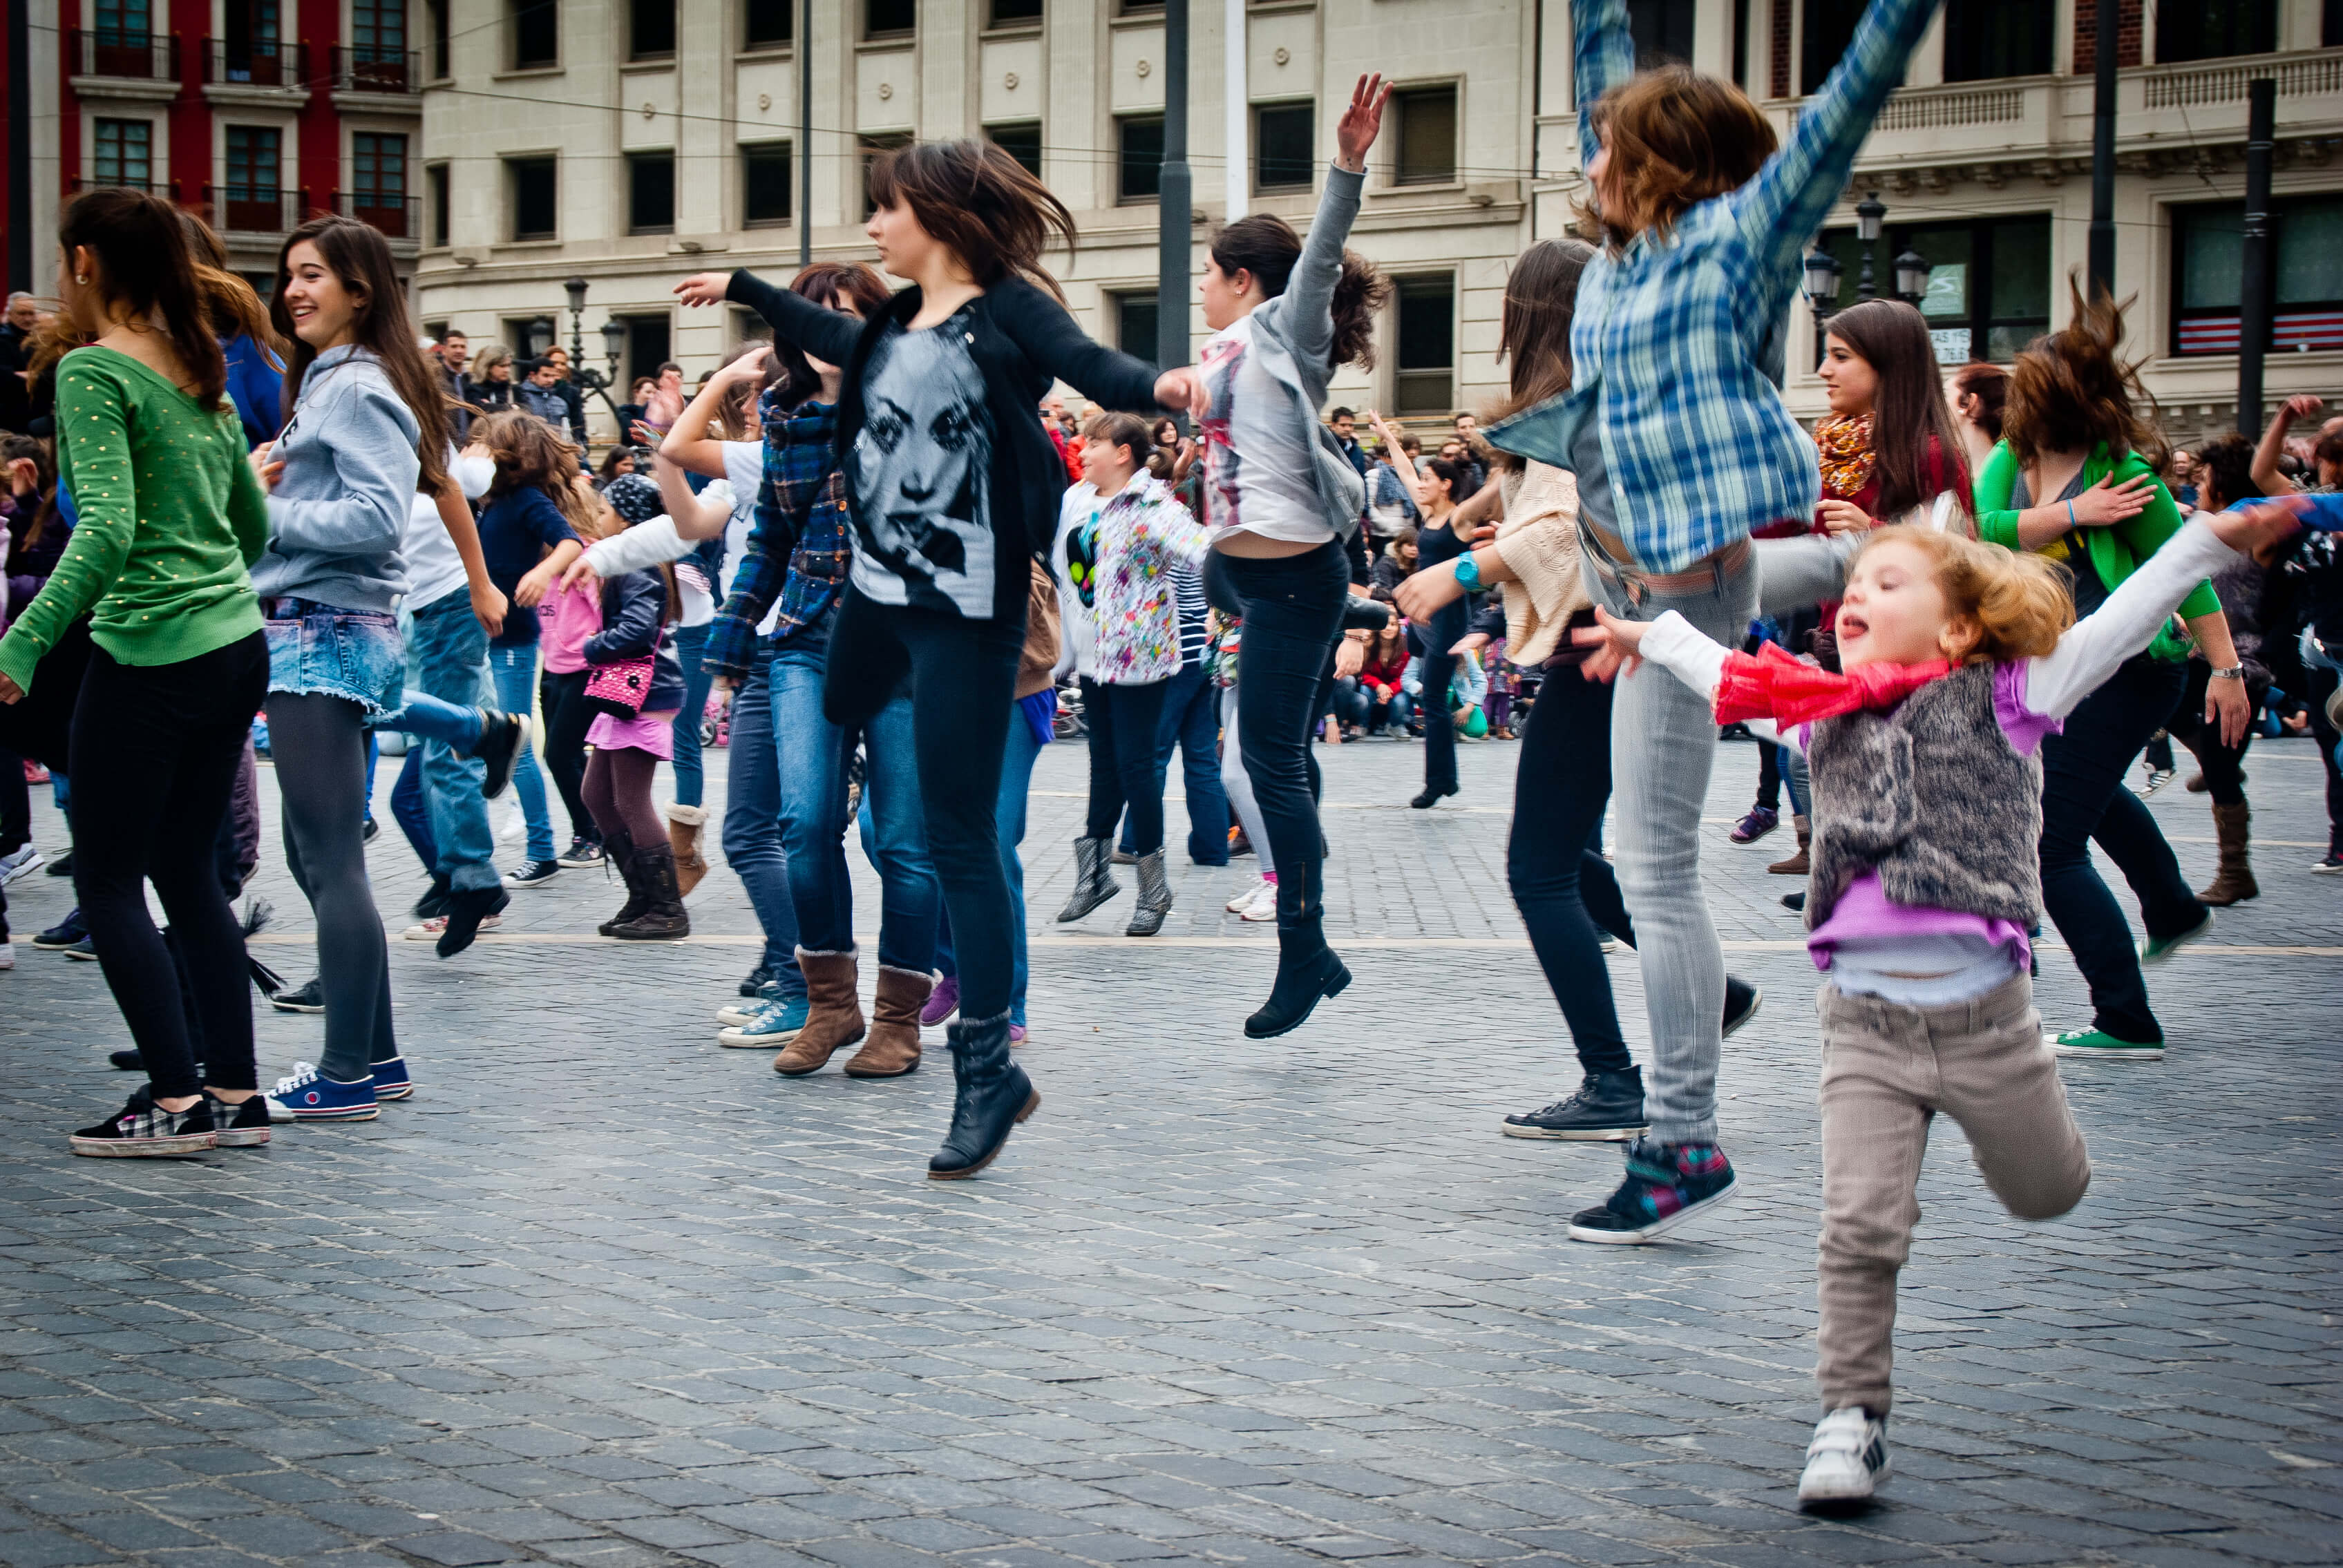 Флэшмоб что это такое. Танцы на улице. Флэшмоб. Массовые танцы на улице. Люди танцуют.